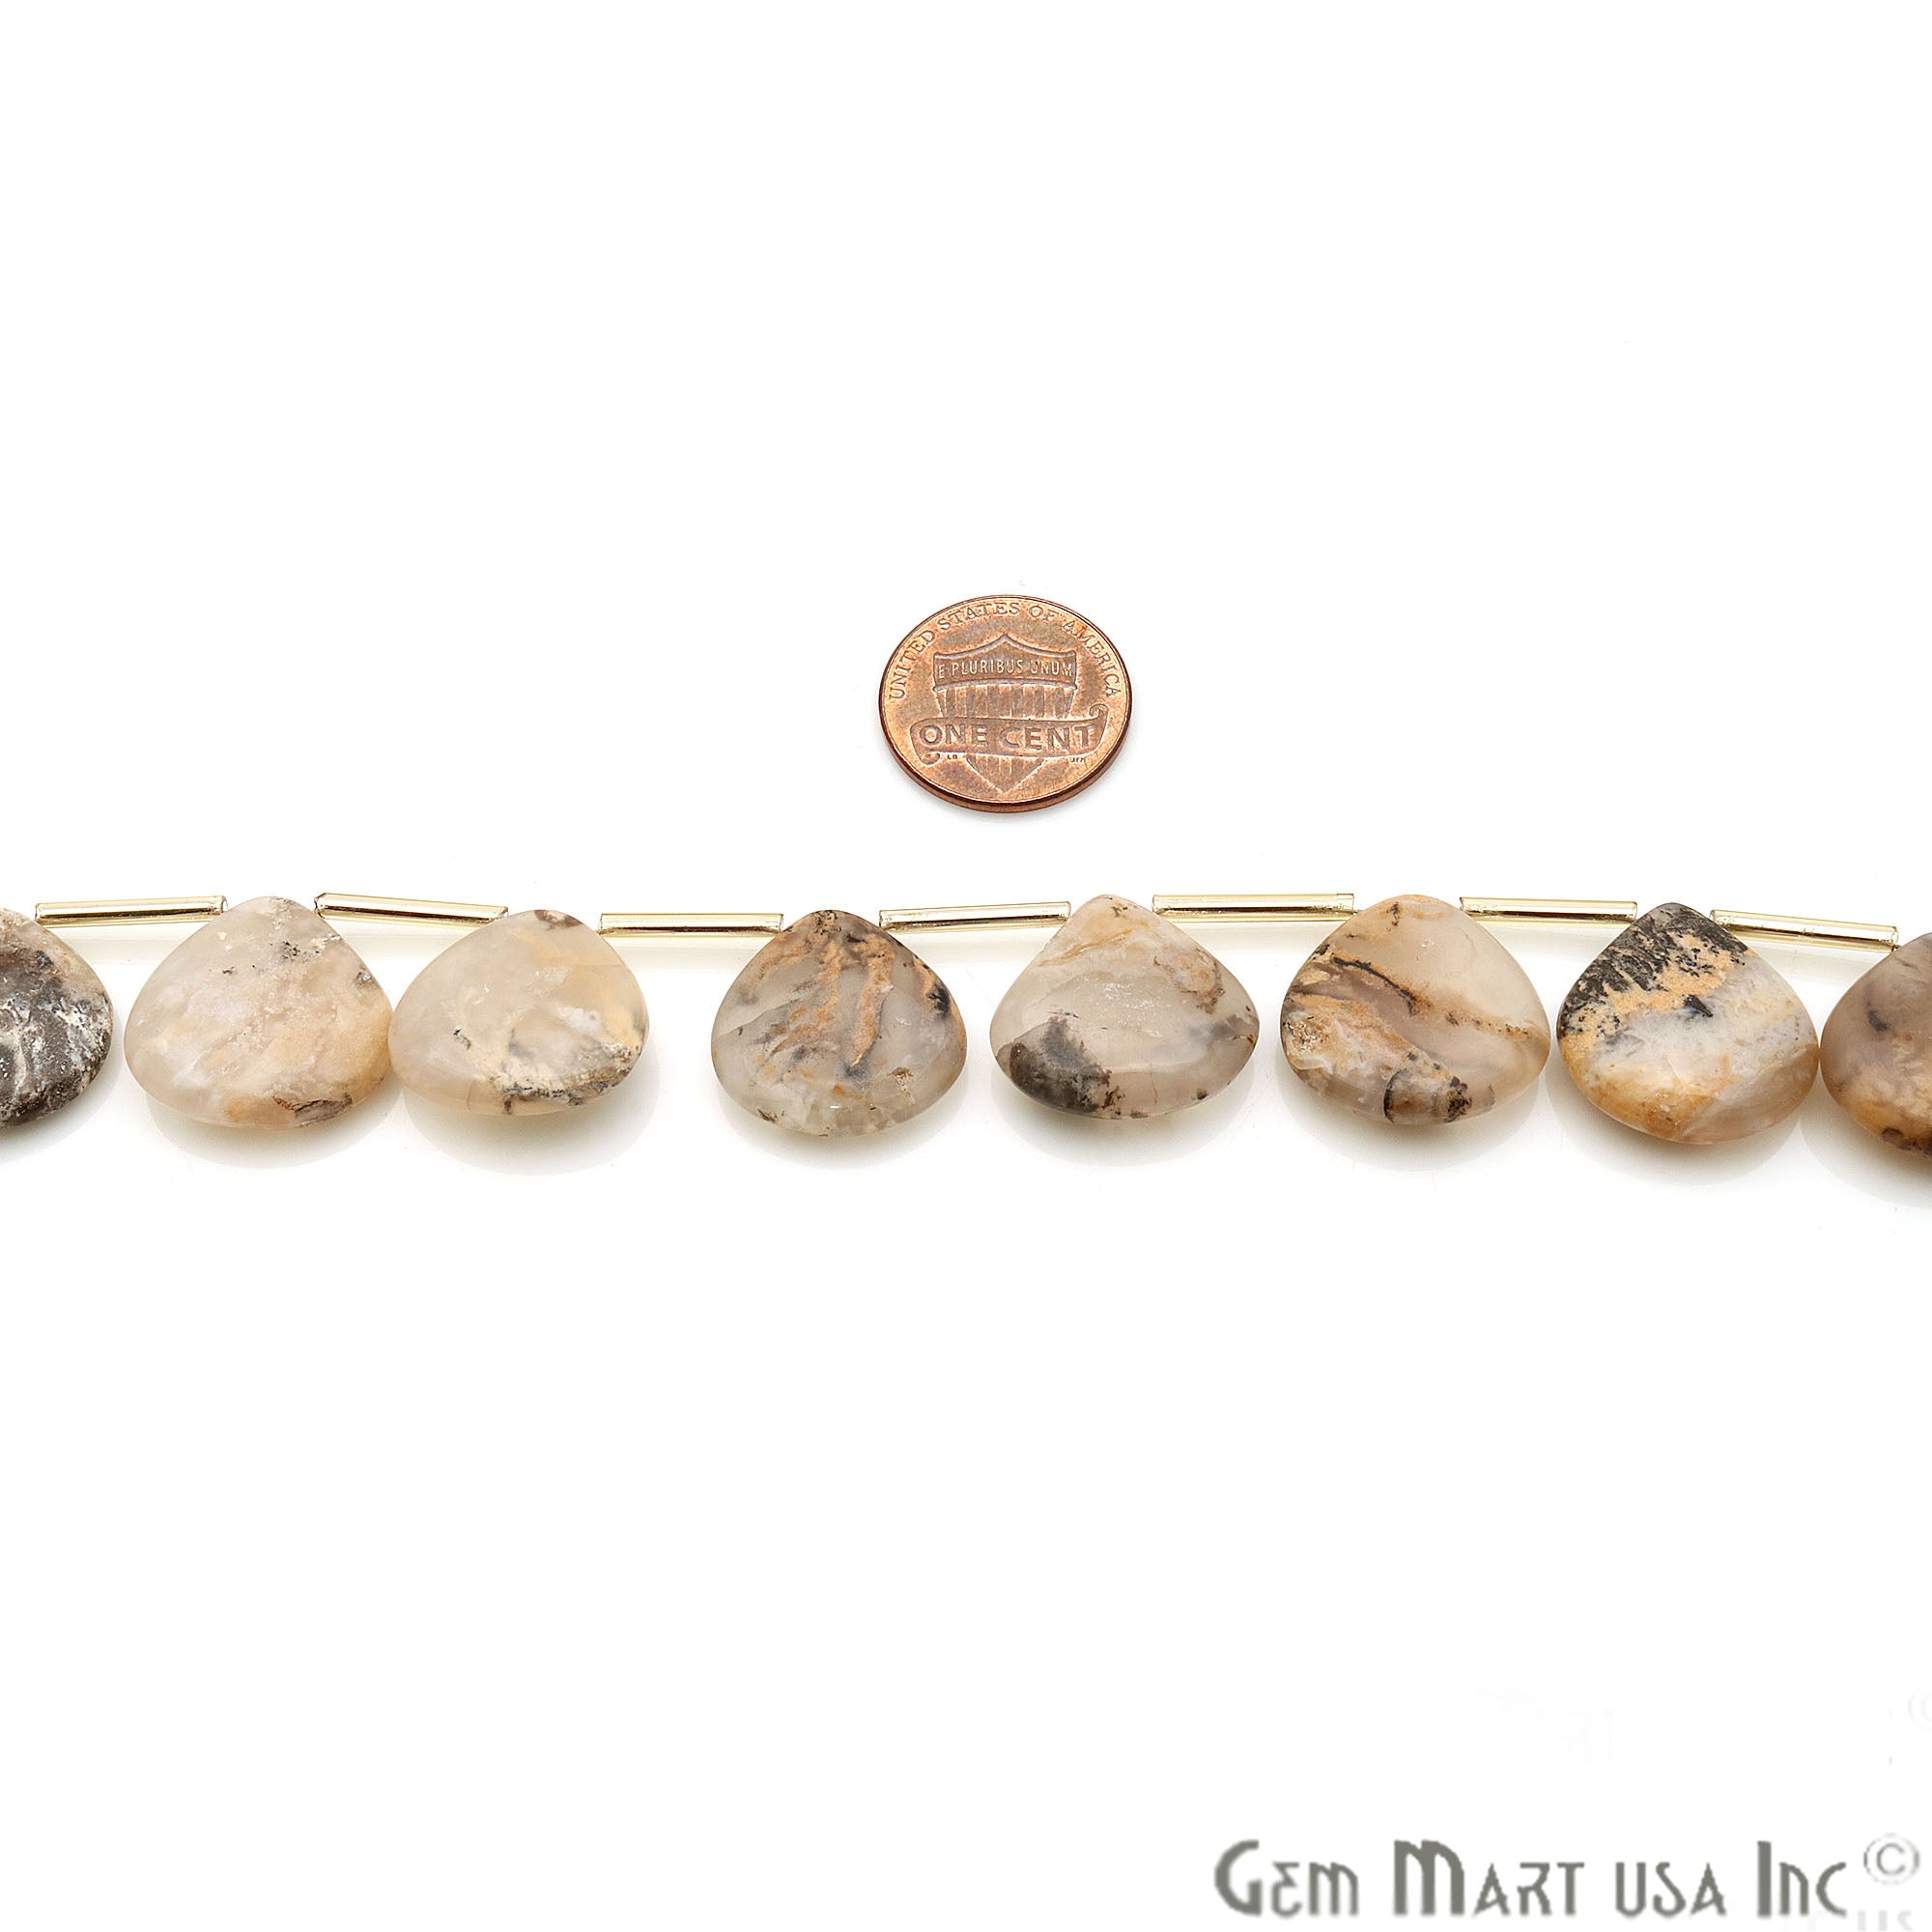 Banded Opal Heart 24x23mm Crafting Beads Gemstone Strands 8INCH - GemMartUSA